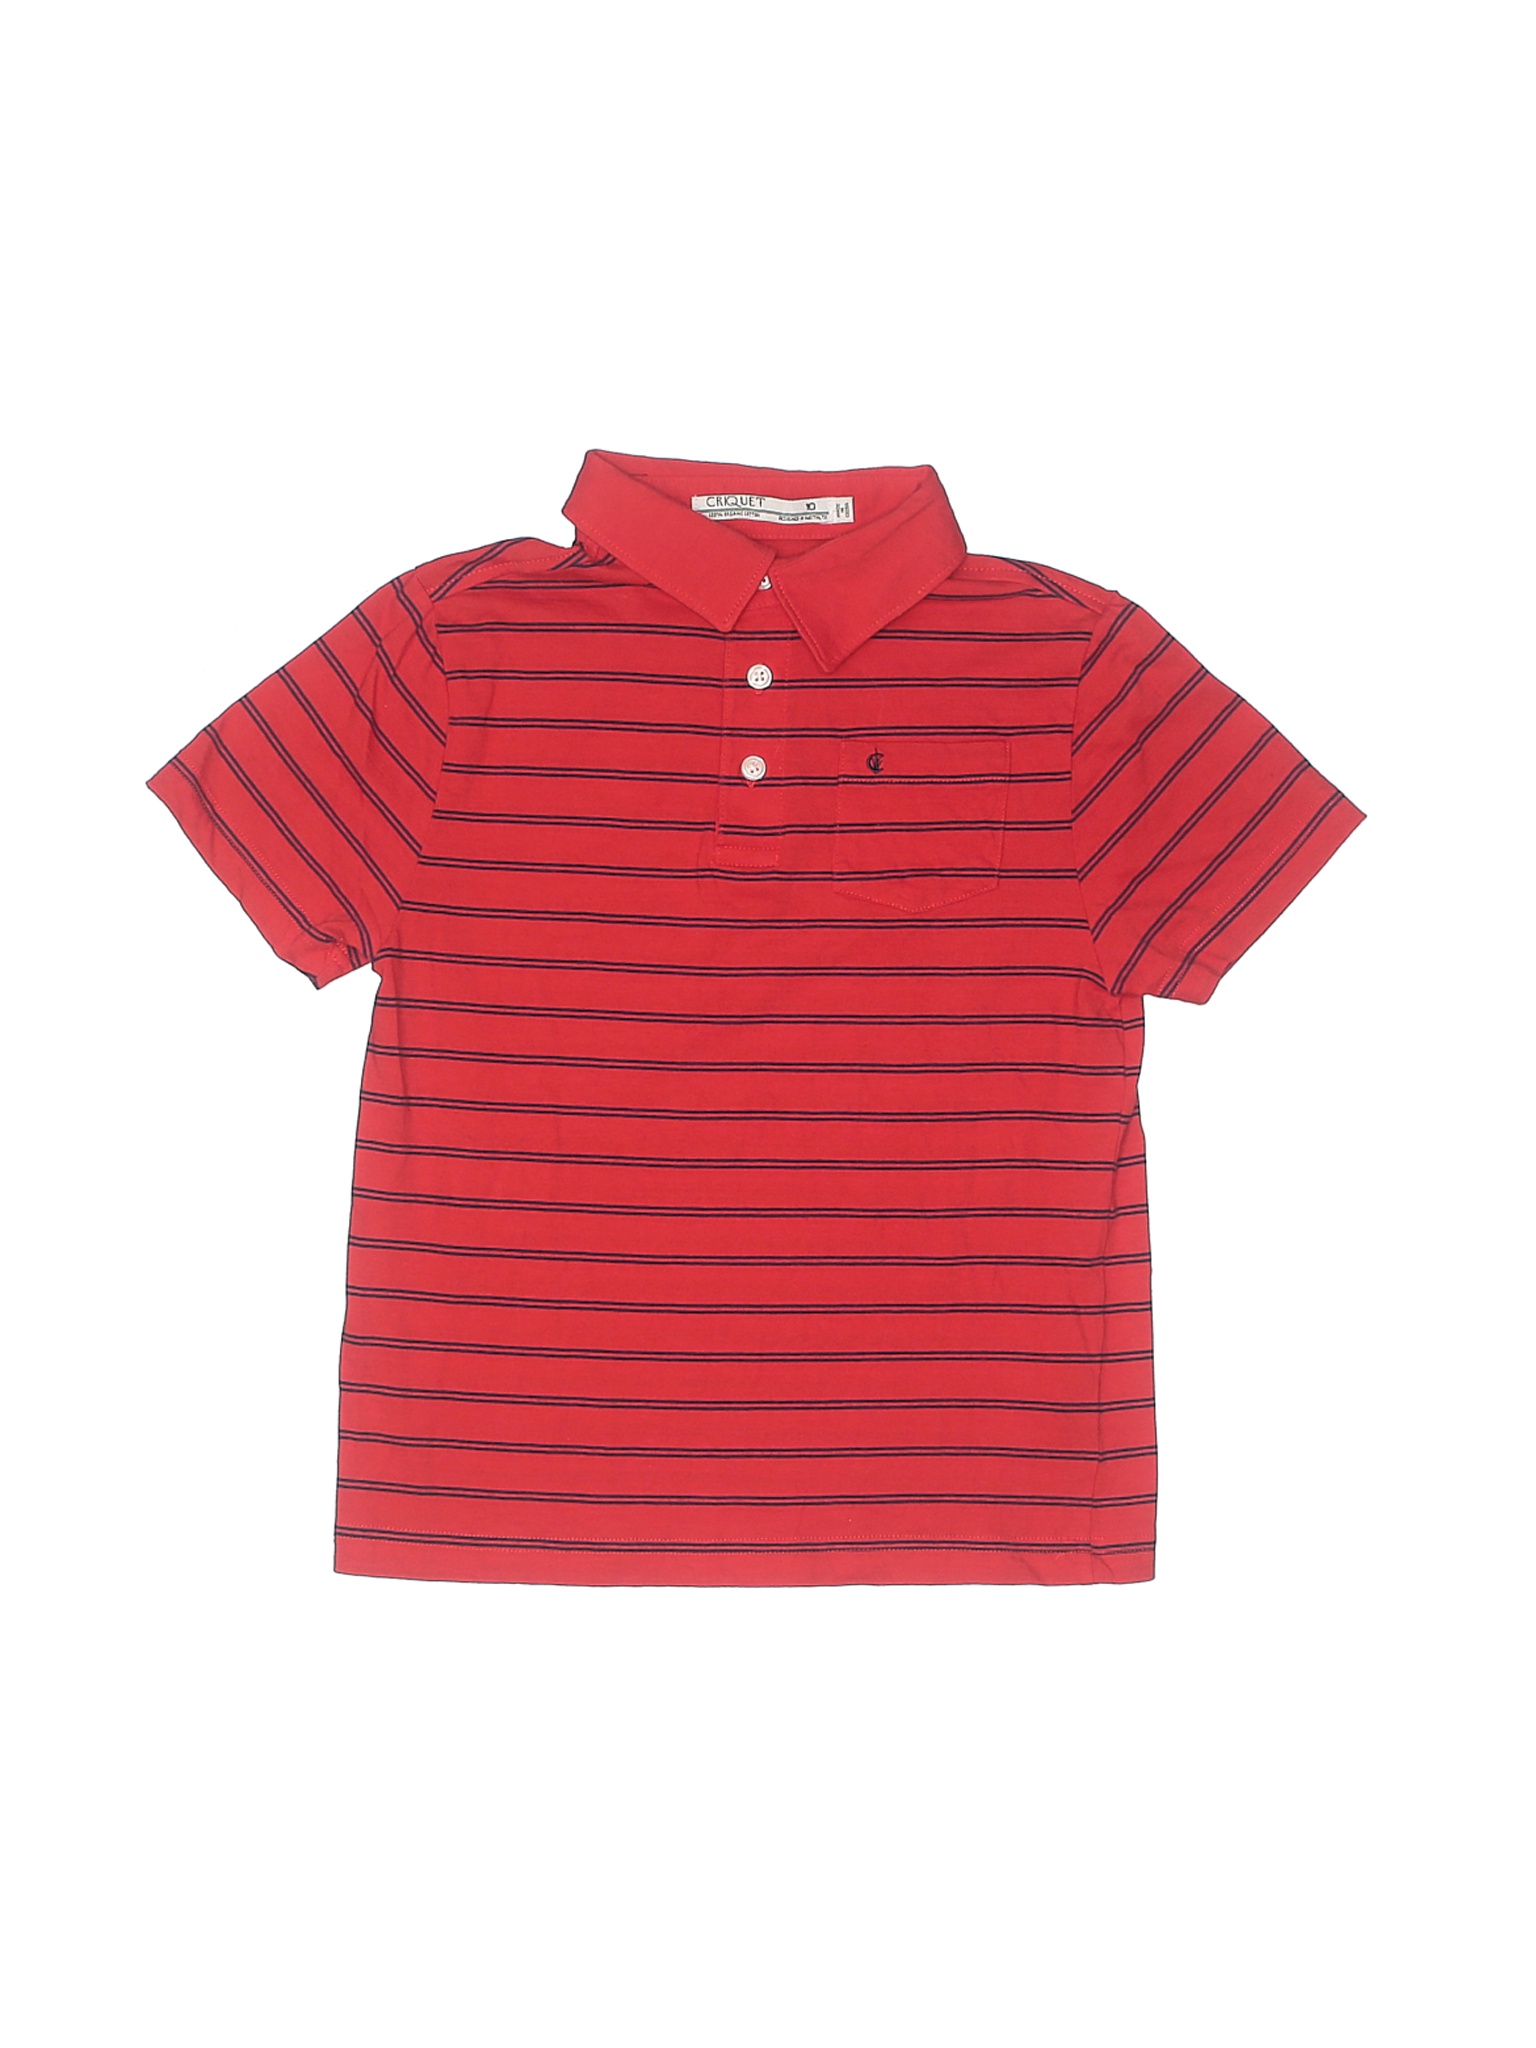 Assorted Brands Boys Red Short Sleeve Polo 10 | eBay